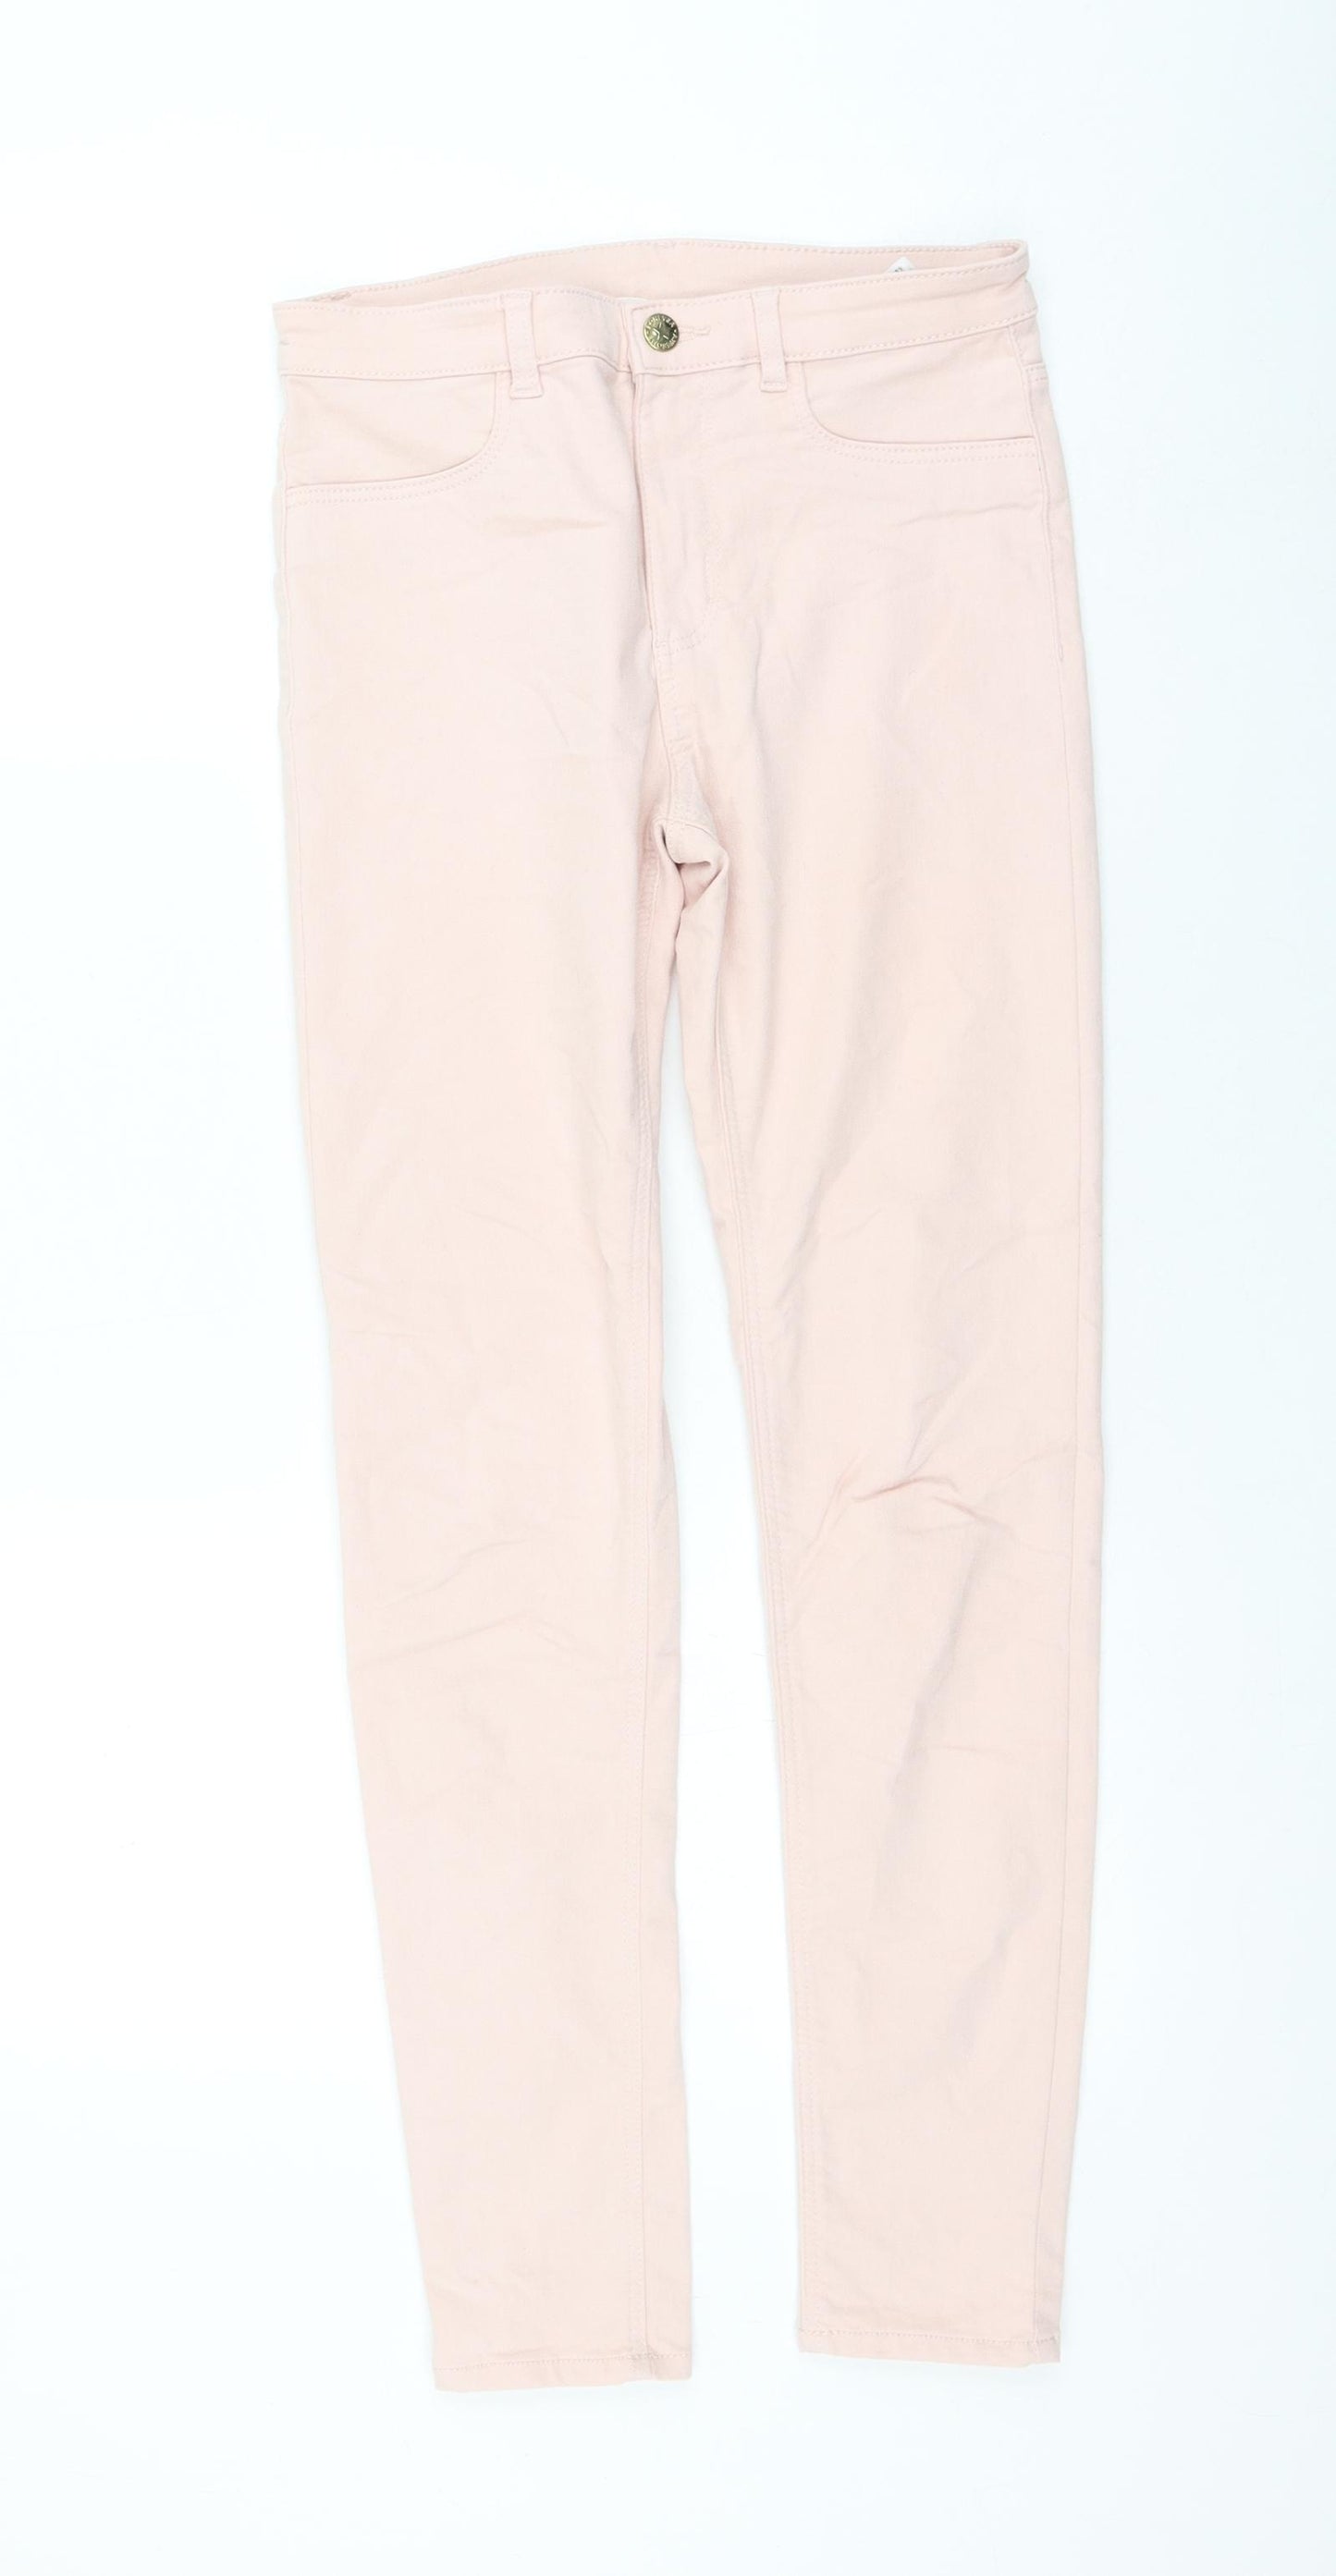 H&M Girls Pink Cotton Skinny Jeans Size 12-13 Years Regular Zip